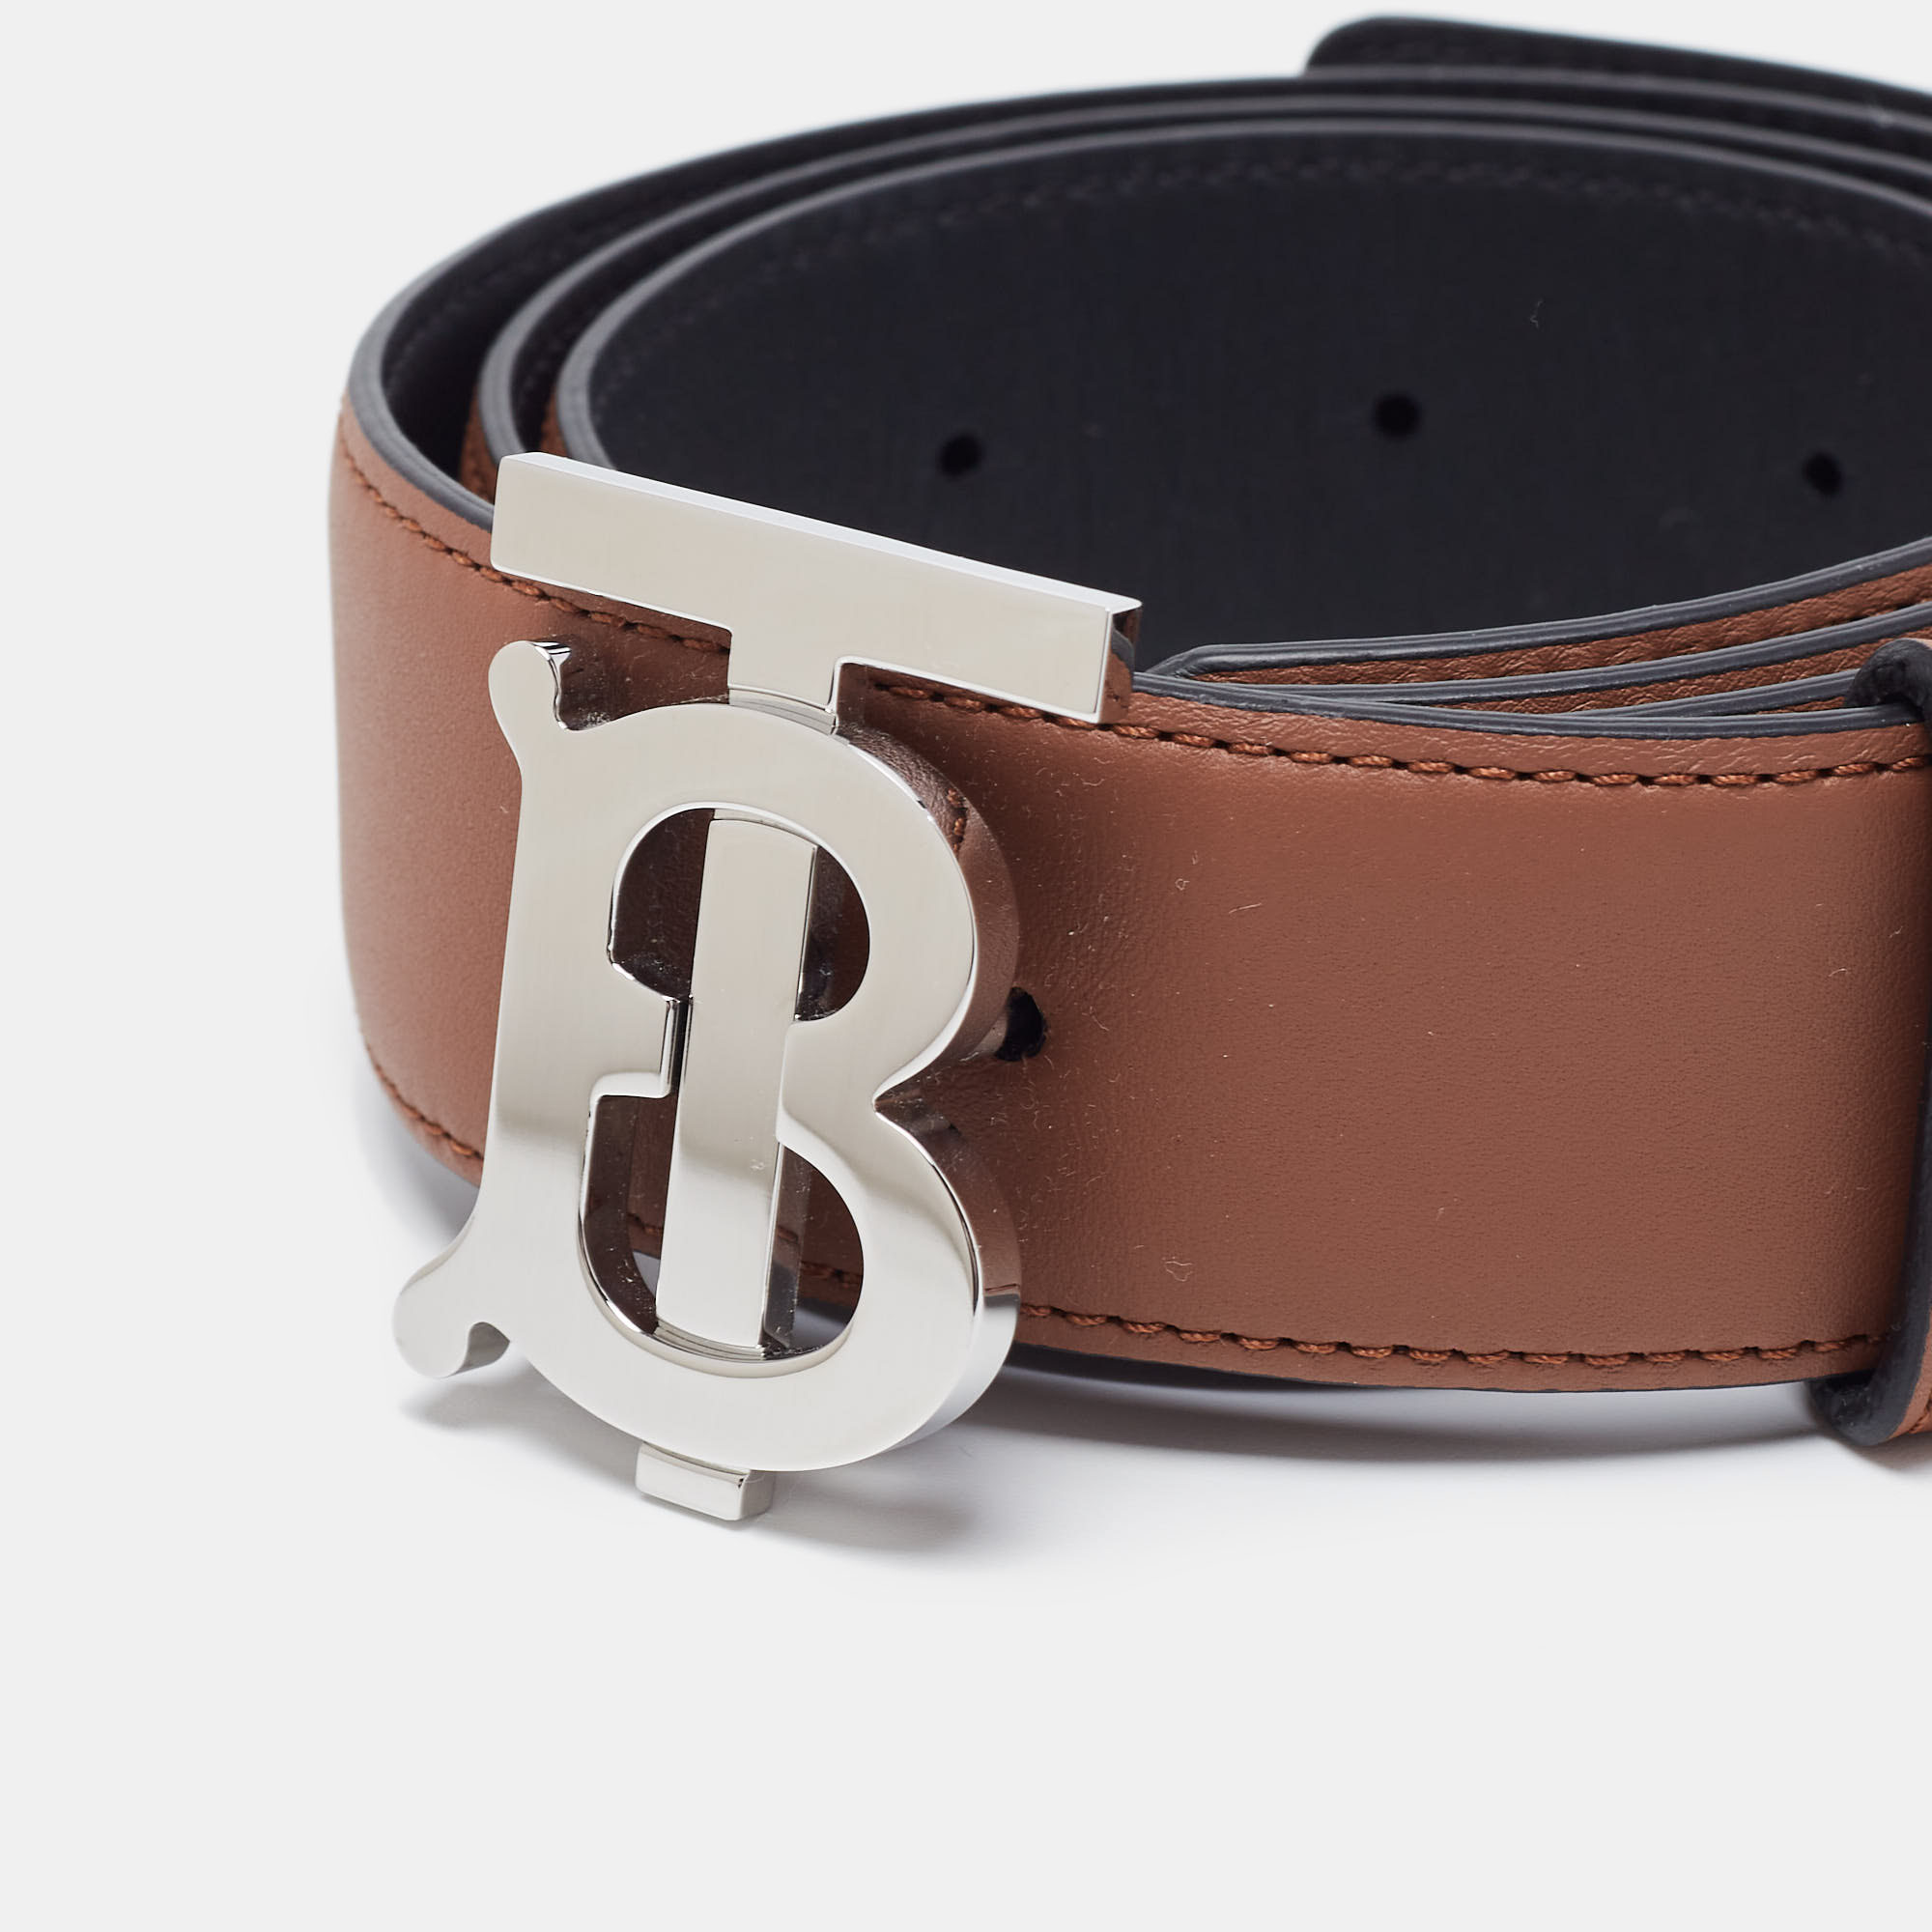 Burberry Black/Brown Leather TB Logo Reversible Belt S